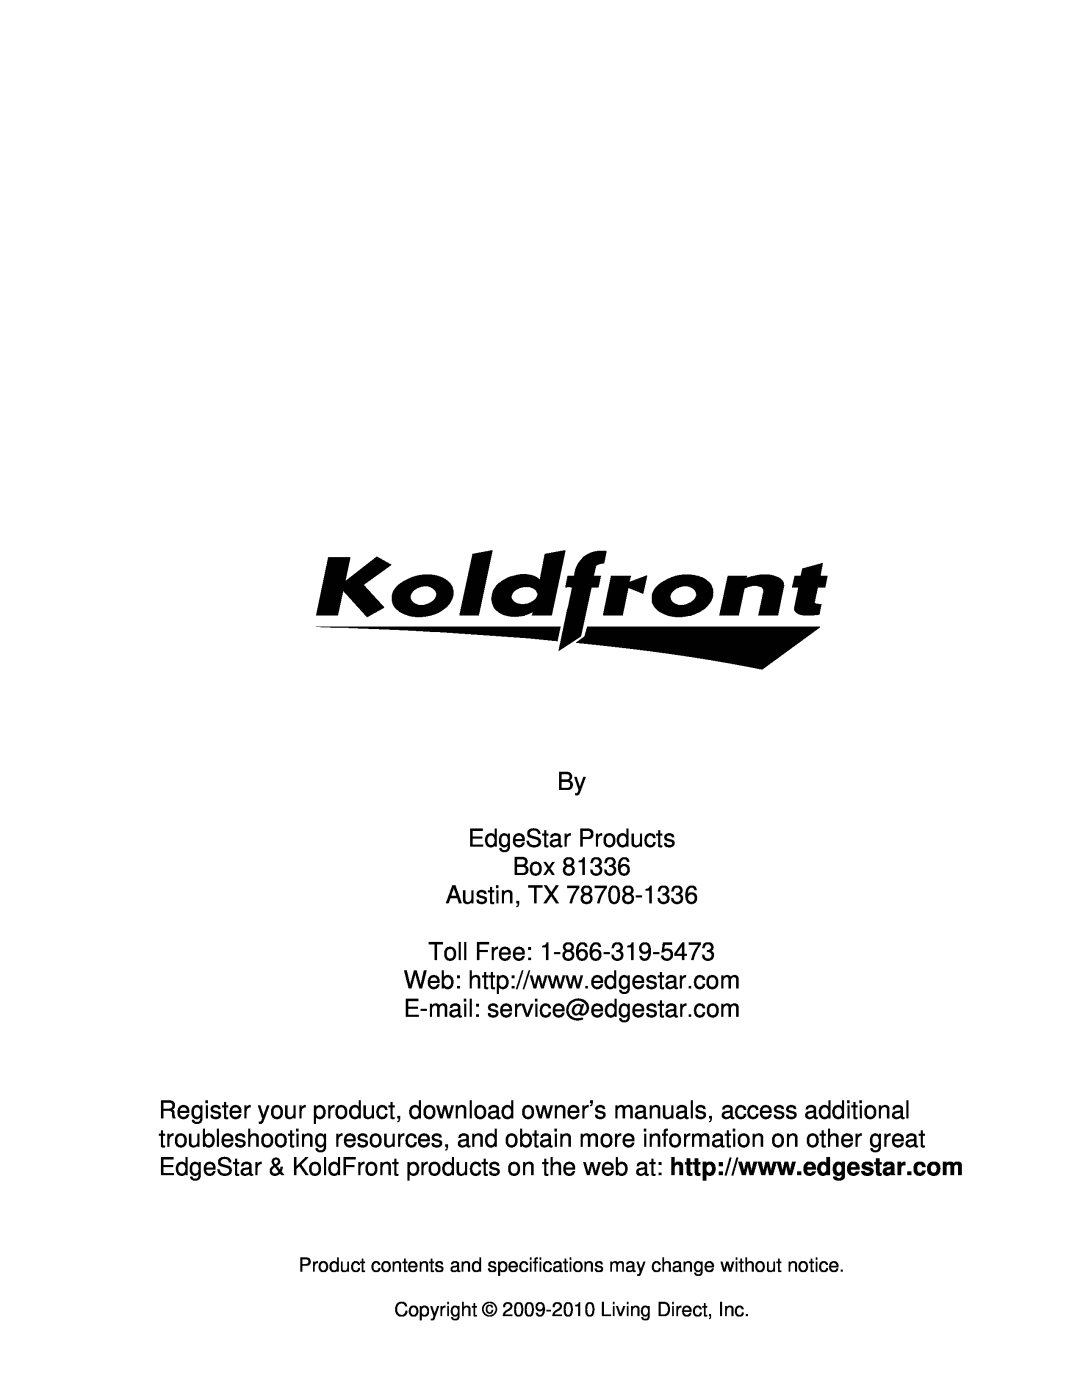 KoldFront KIM450S owner manual By EdgeStar Products Box Austin, TX Toll Free, E-mail service@edgestar.com 